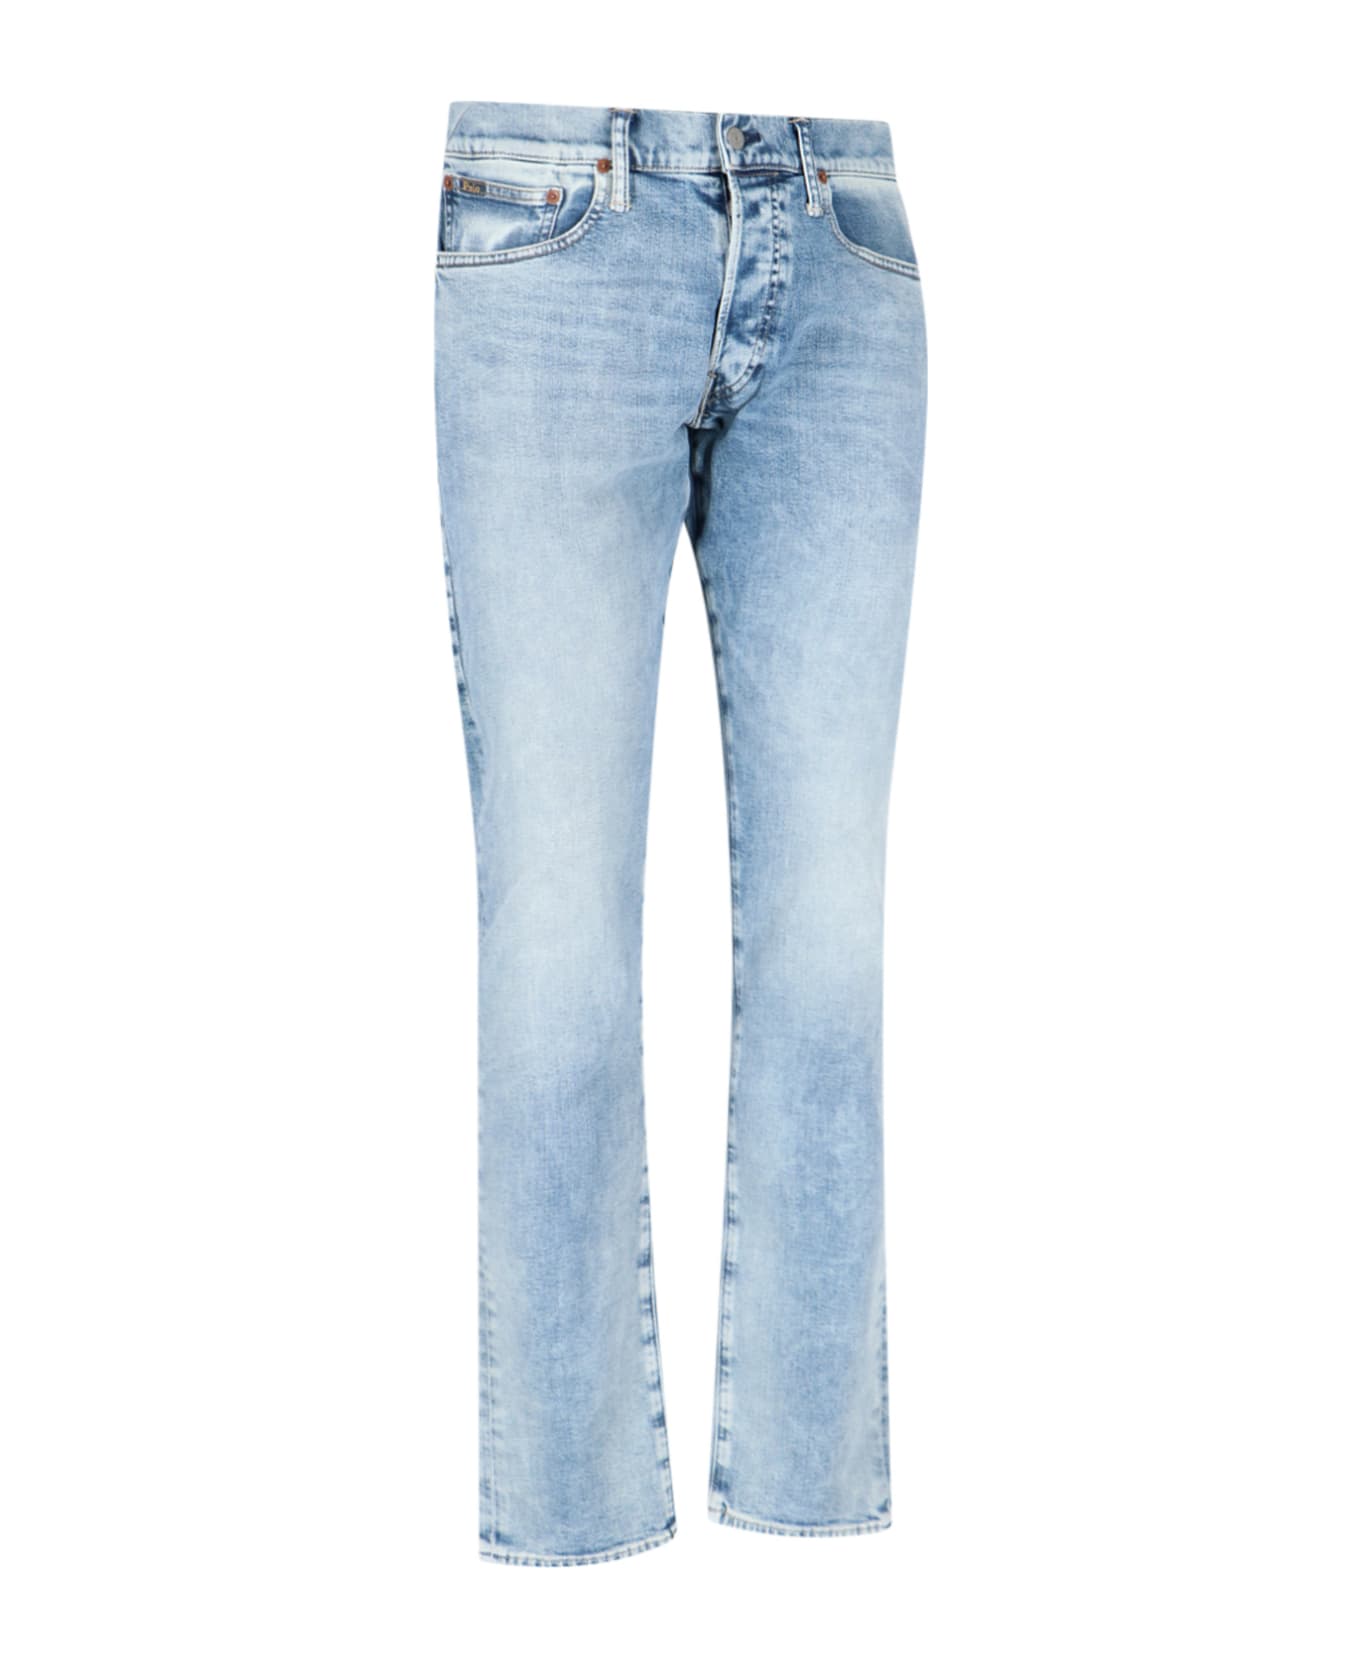 Polo Ralph Lauren Slim Fit Jeans - Light Blue デニム